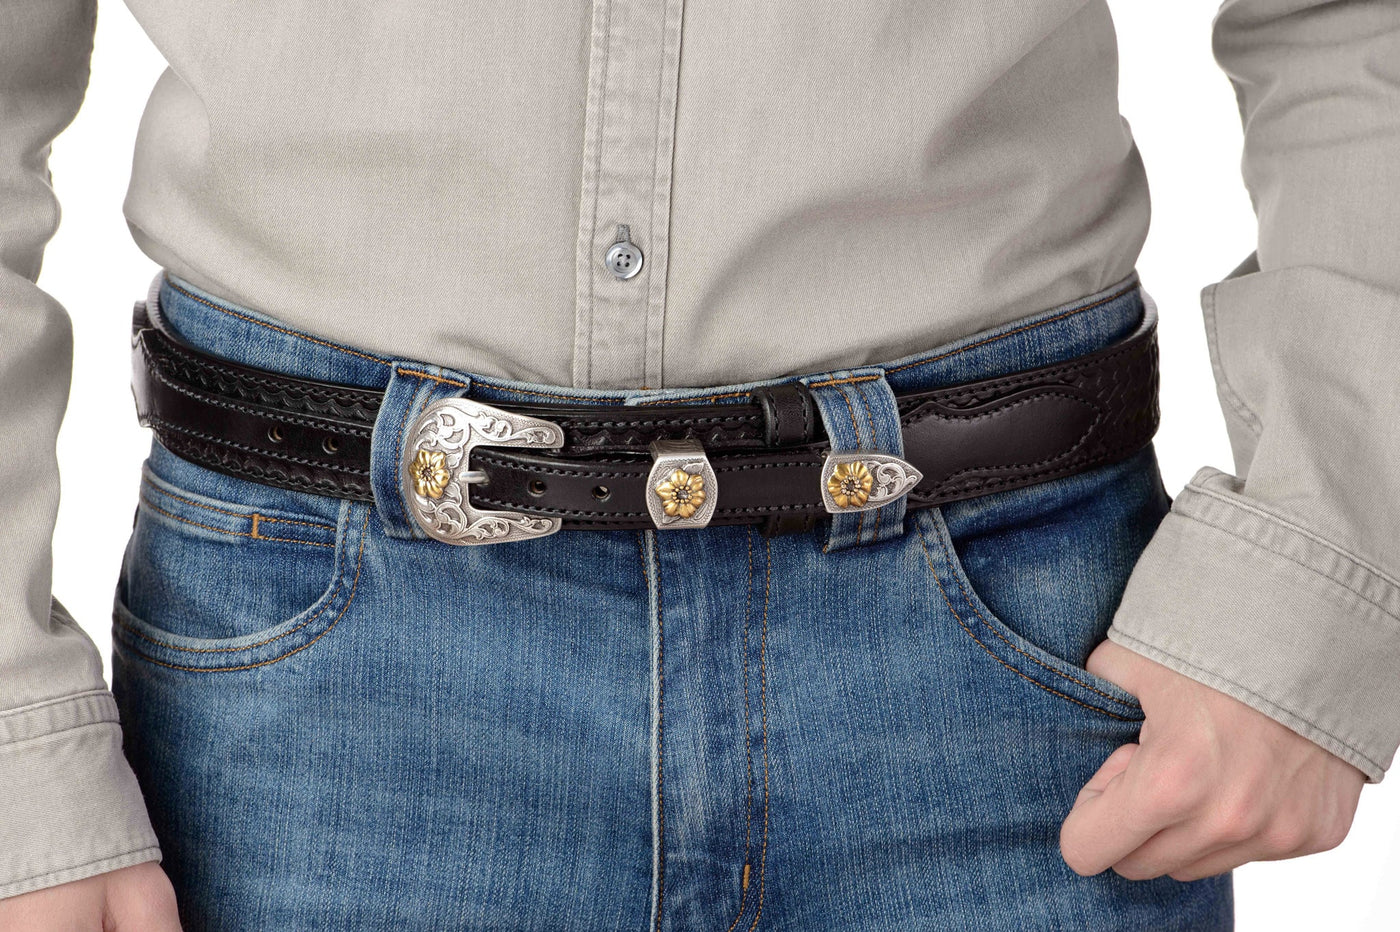 Men's Genuine Leather Brown Formal Belt .100% Pure Genuine Leather  Guaranteed. Designer Belt for Men.